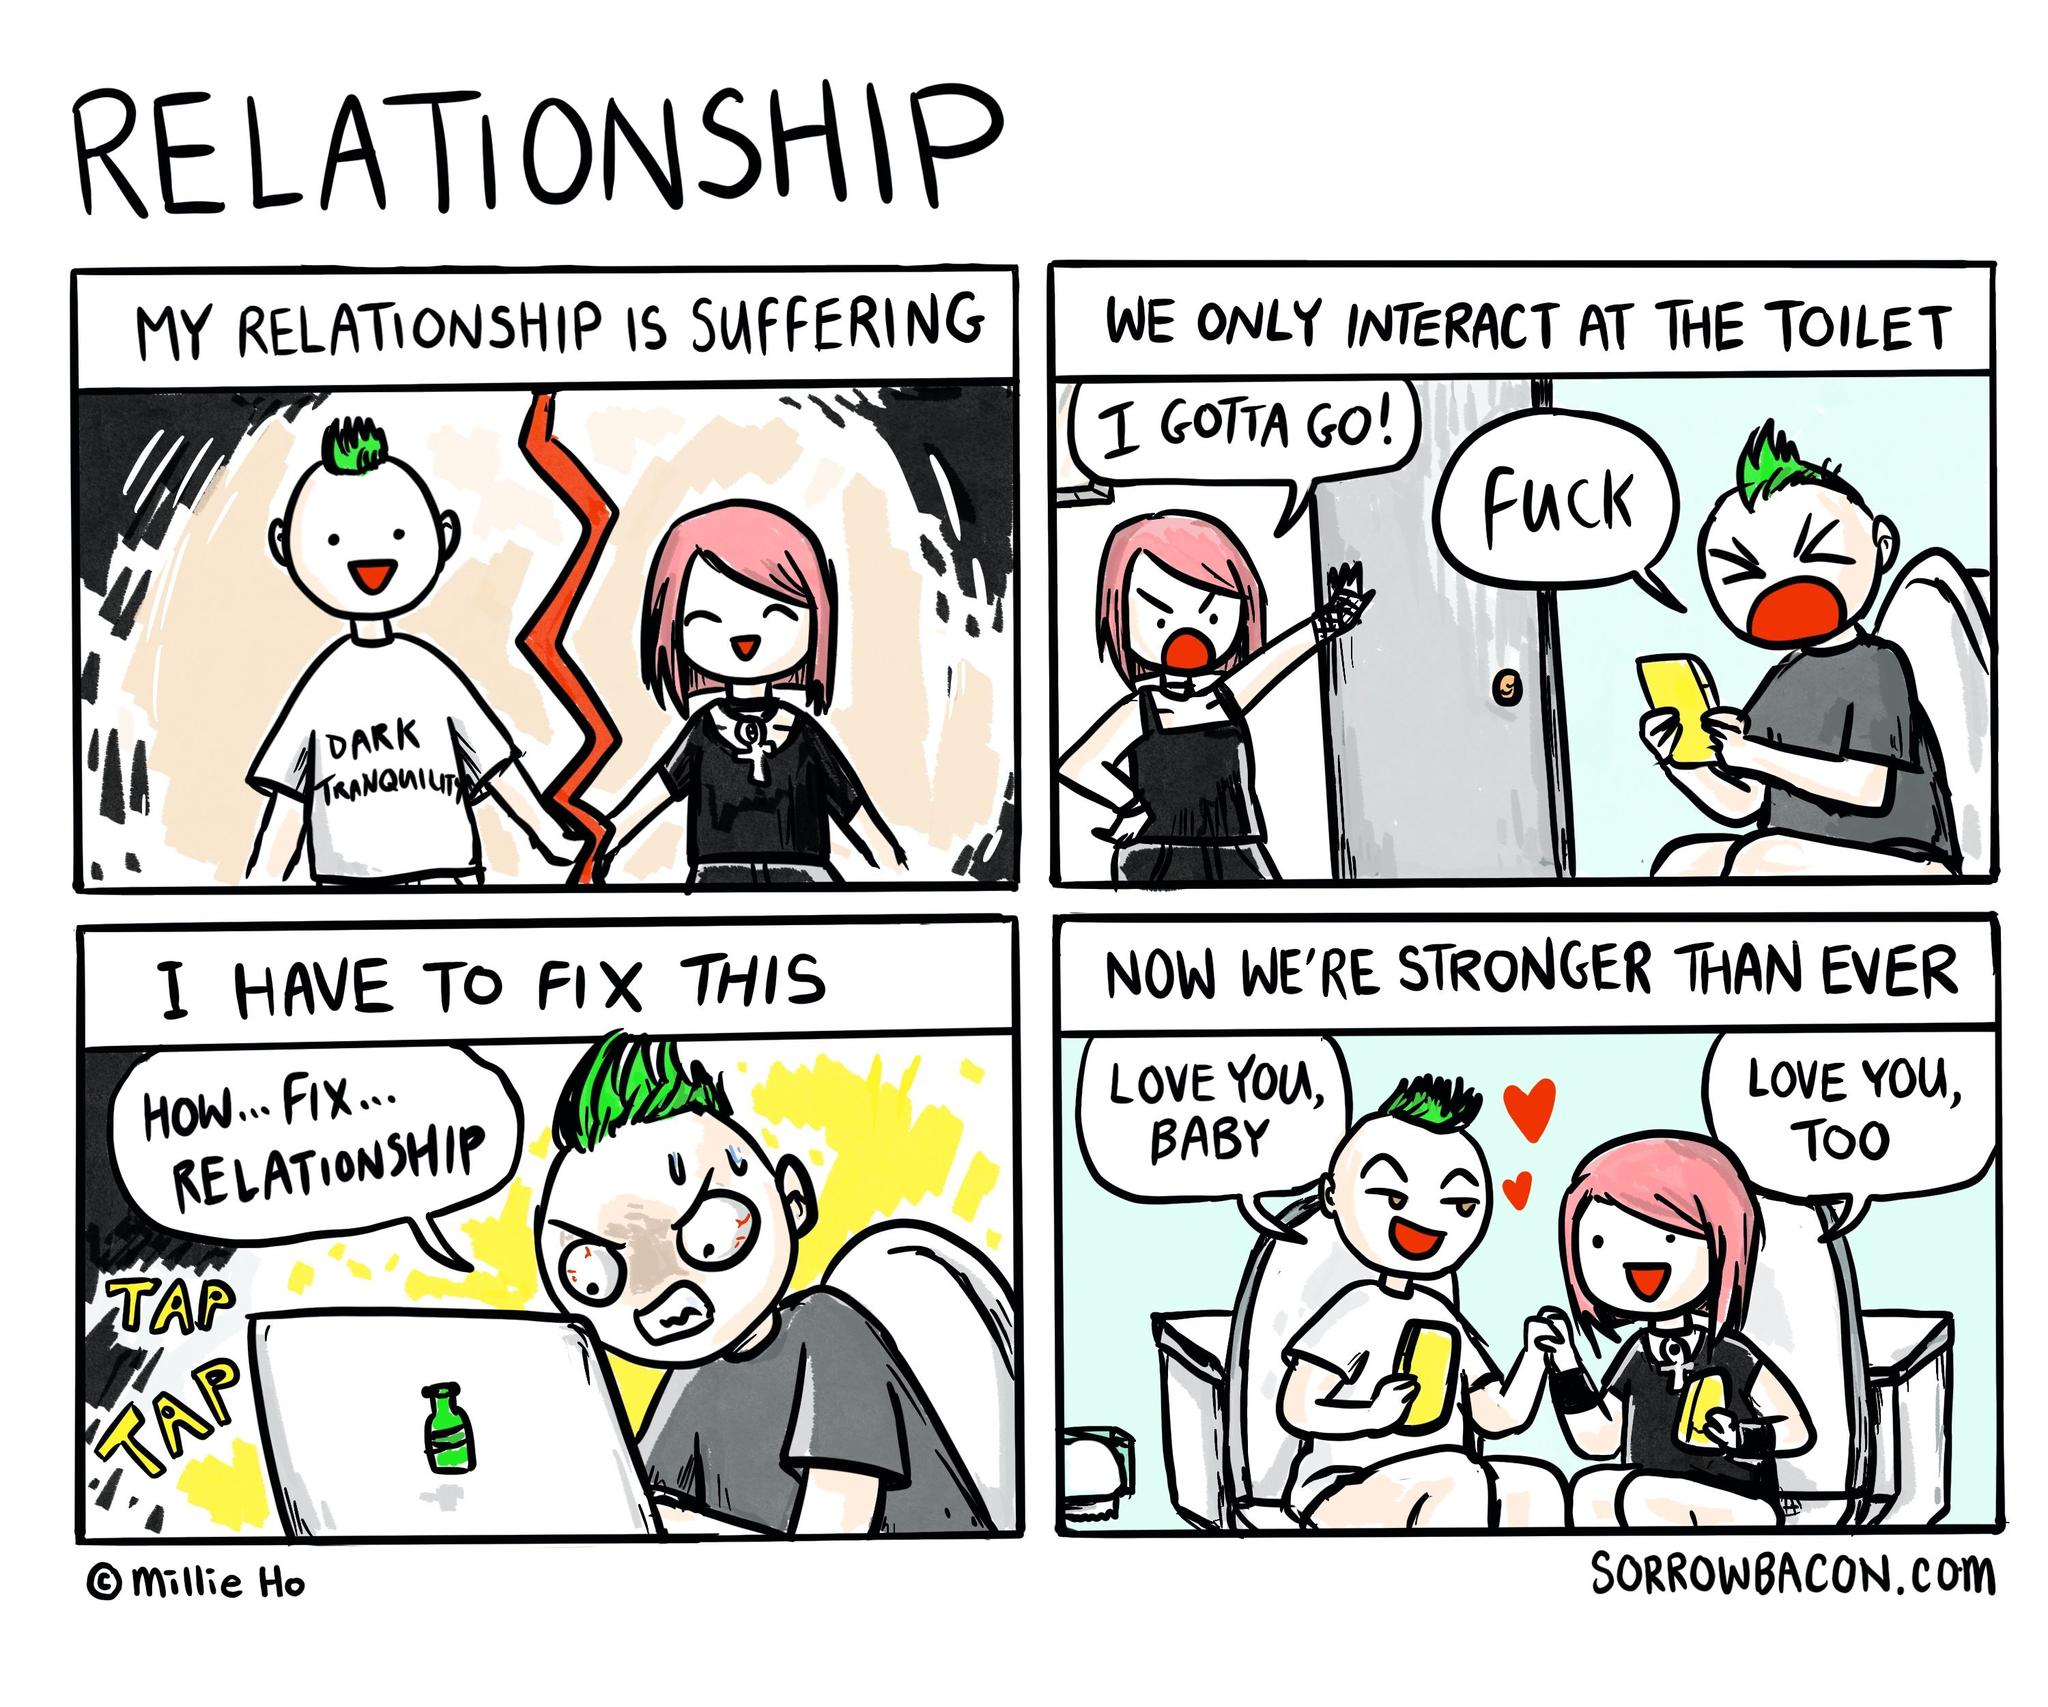 Relationship sorrowbacon comic